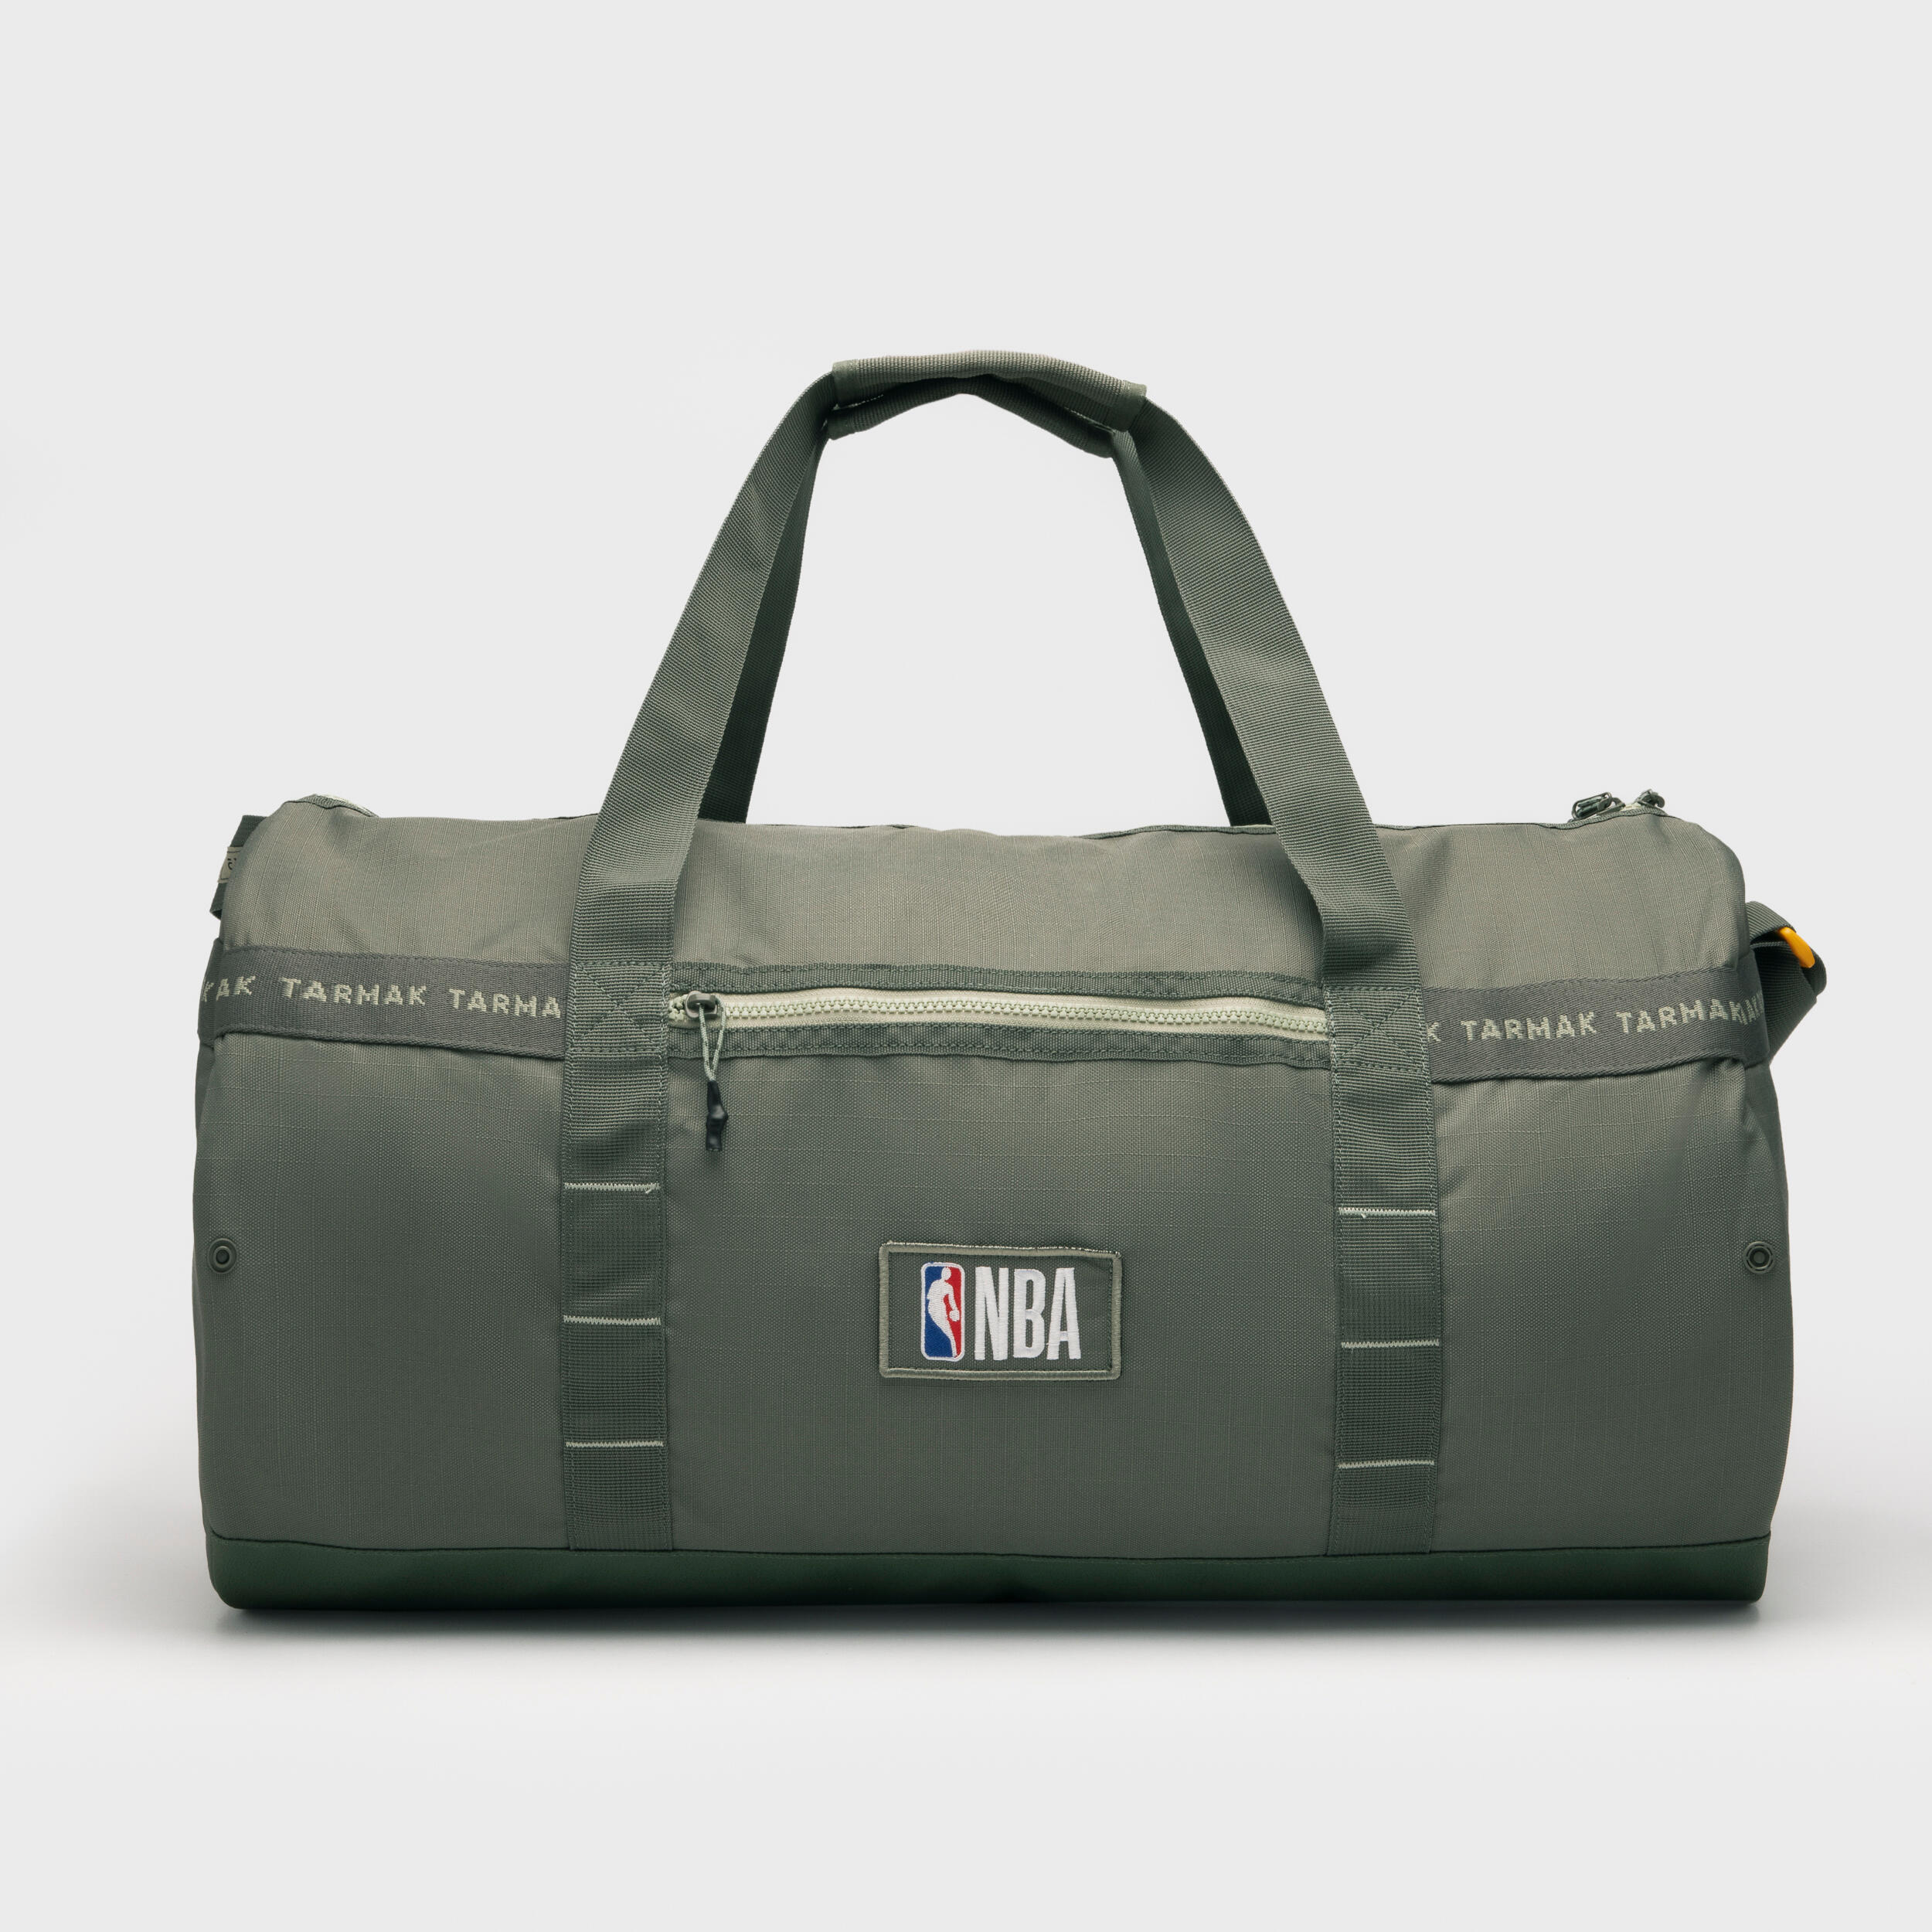 Basketball Sports Bag NBA Lakers - Green 1/7